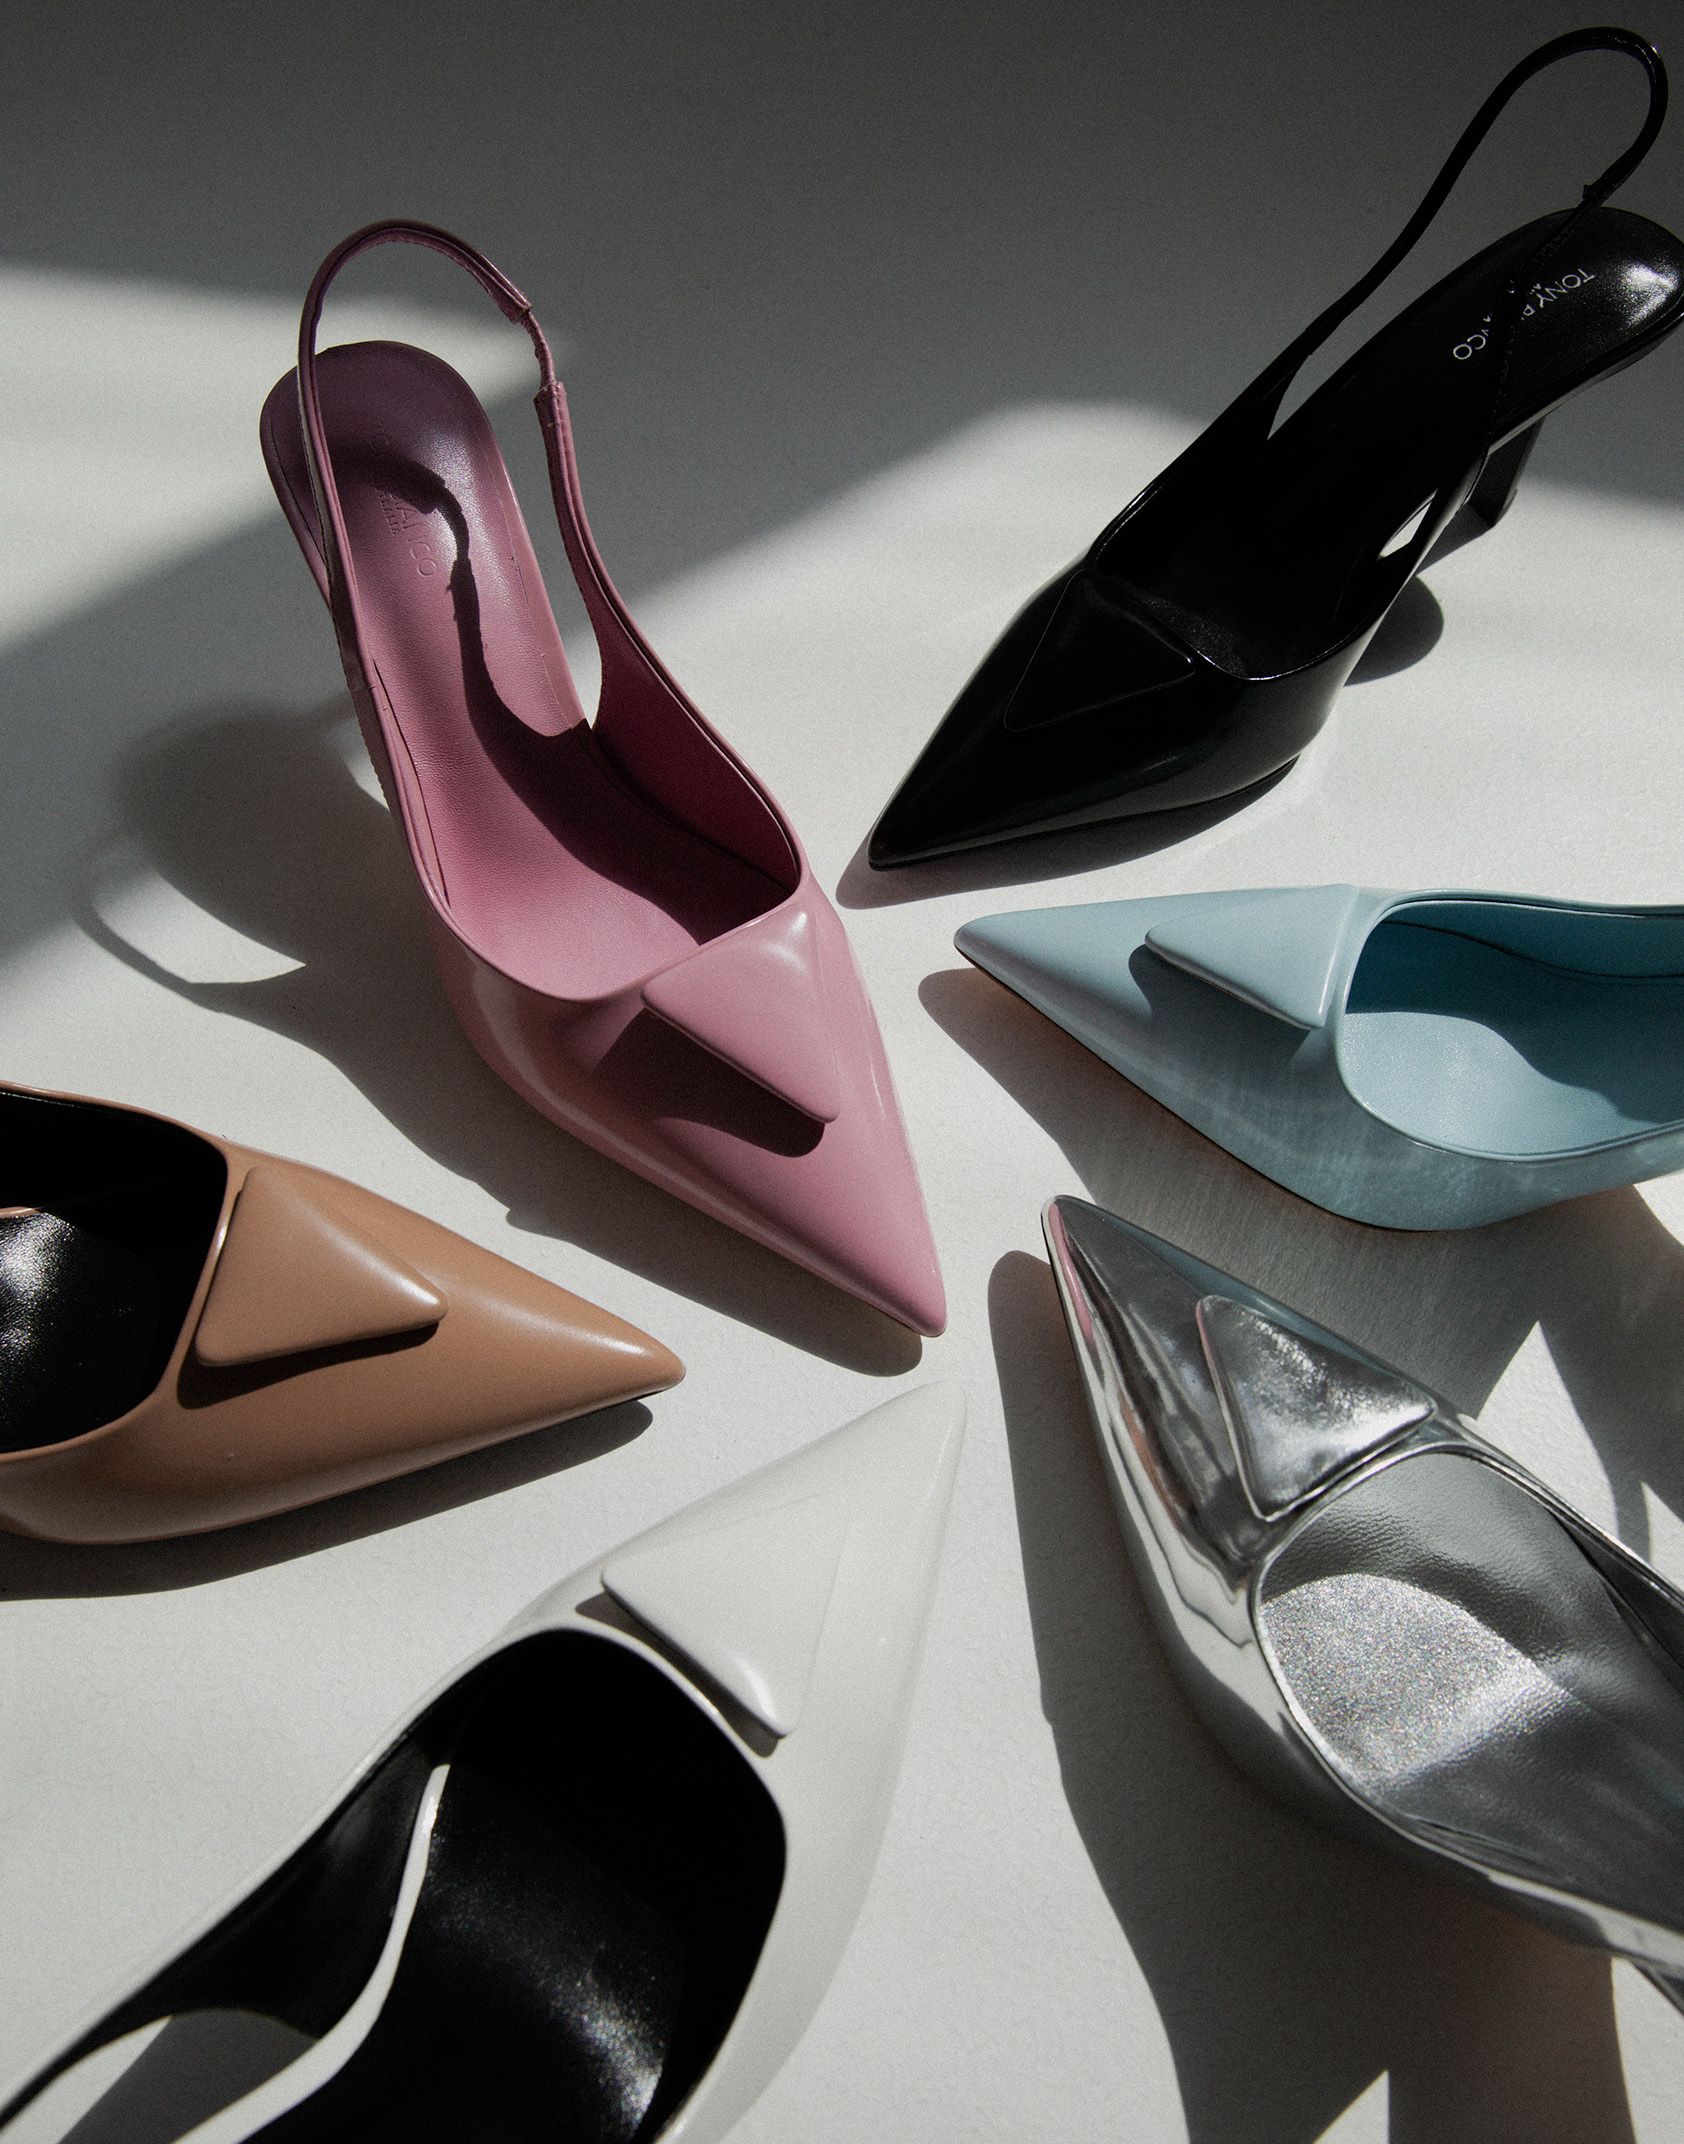 Tony Bianco | Women's Shoes Online | Heels, Boots & Sandals | Tony Bianco